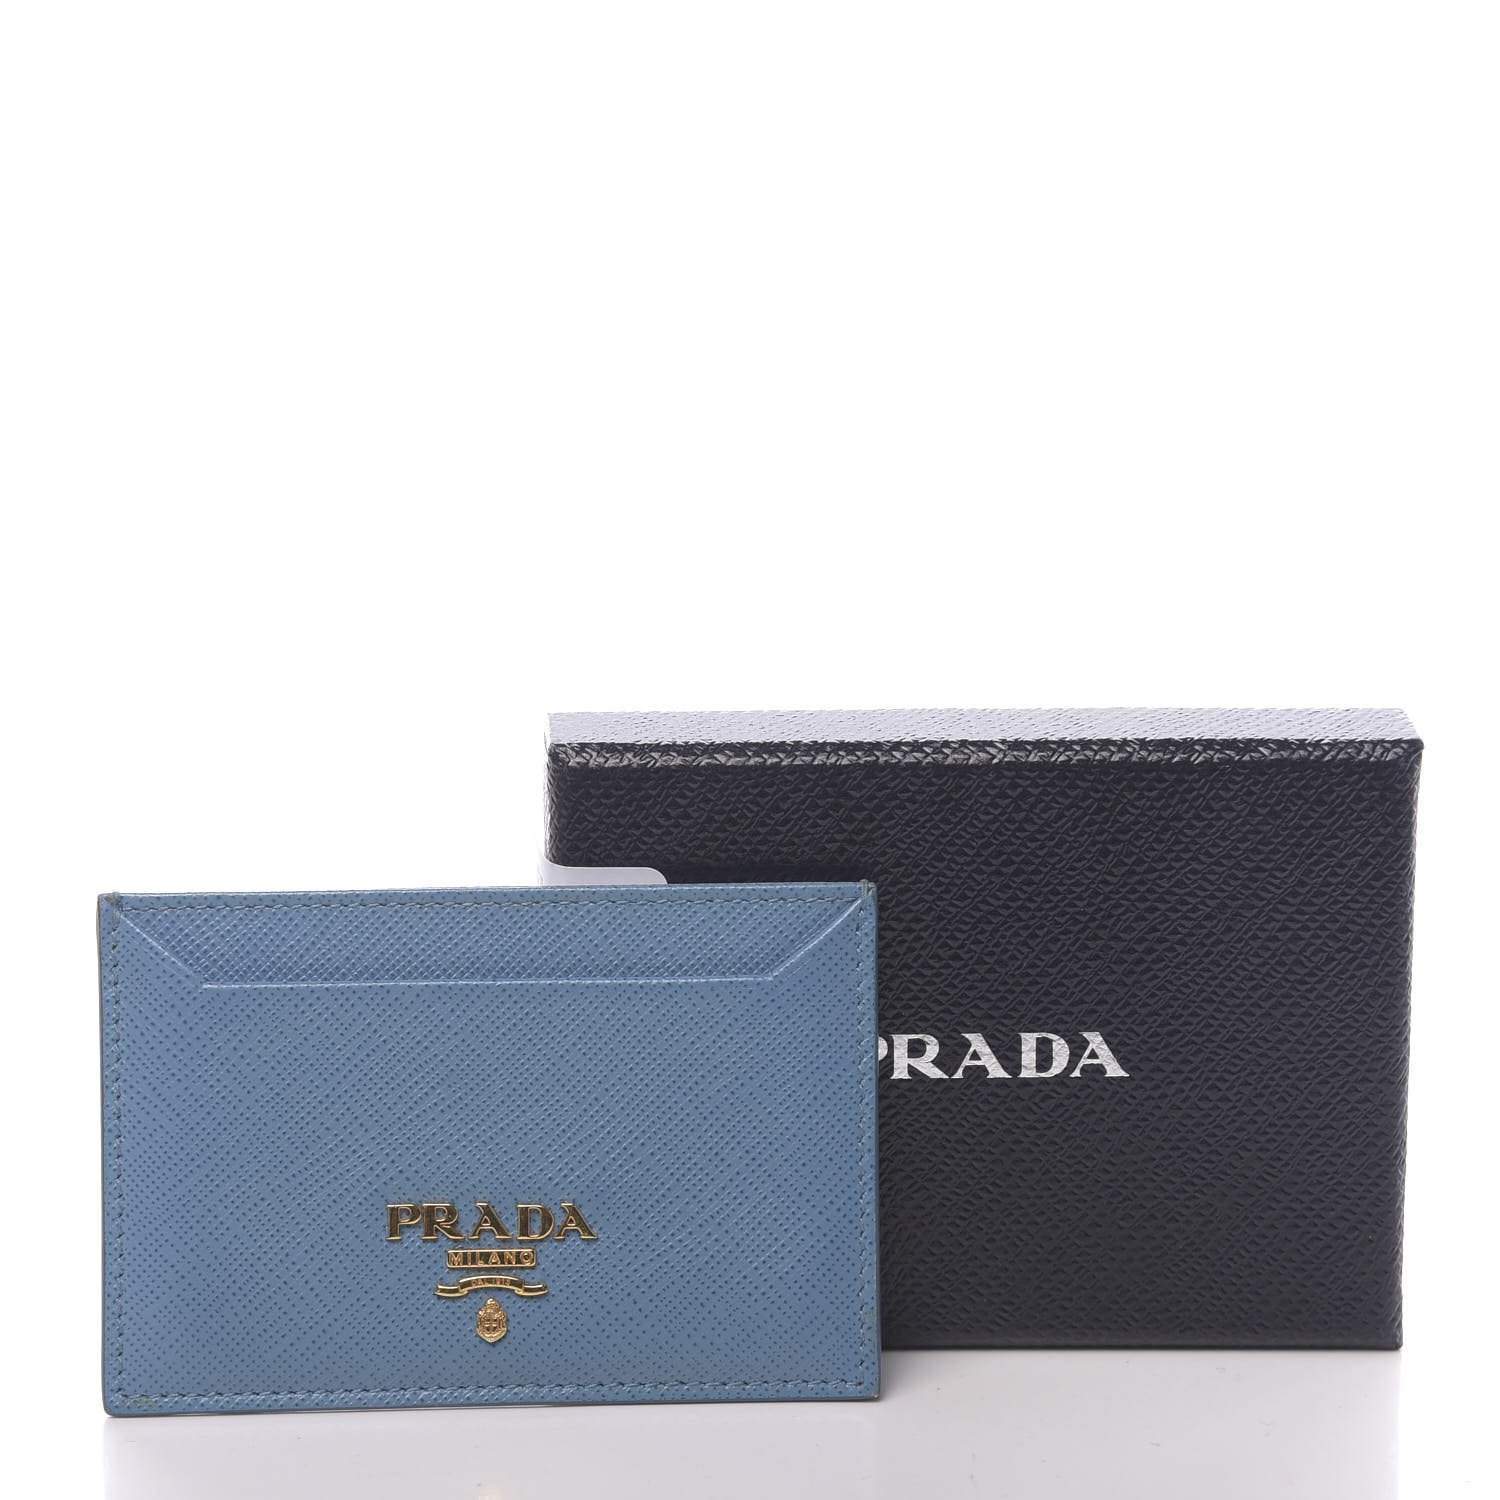 PRADA Saffiano Metal Card Case Astrale 637357 | FASHIONPHILE